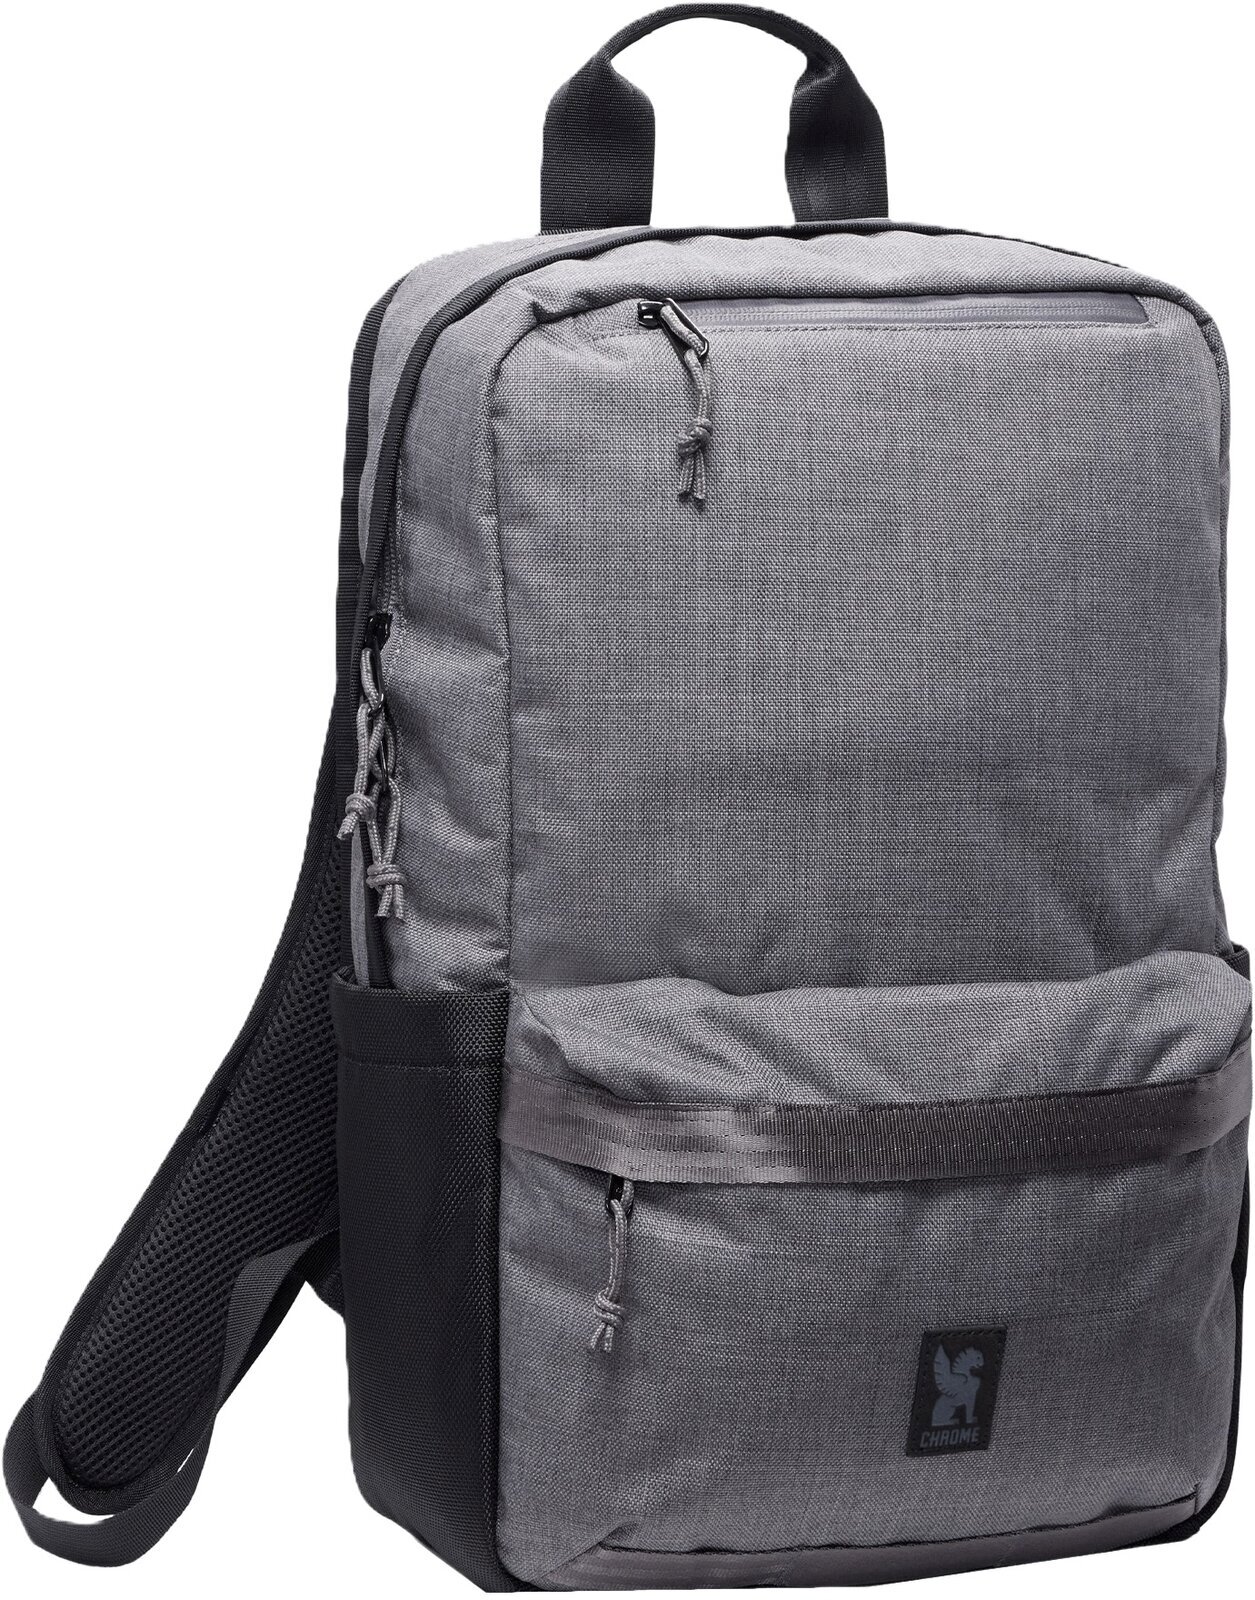 Lifestyle plecak / Torba Chrome Hondo Backpack Castlerock Twill 18 L Plecak